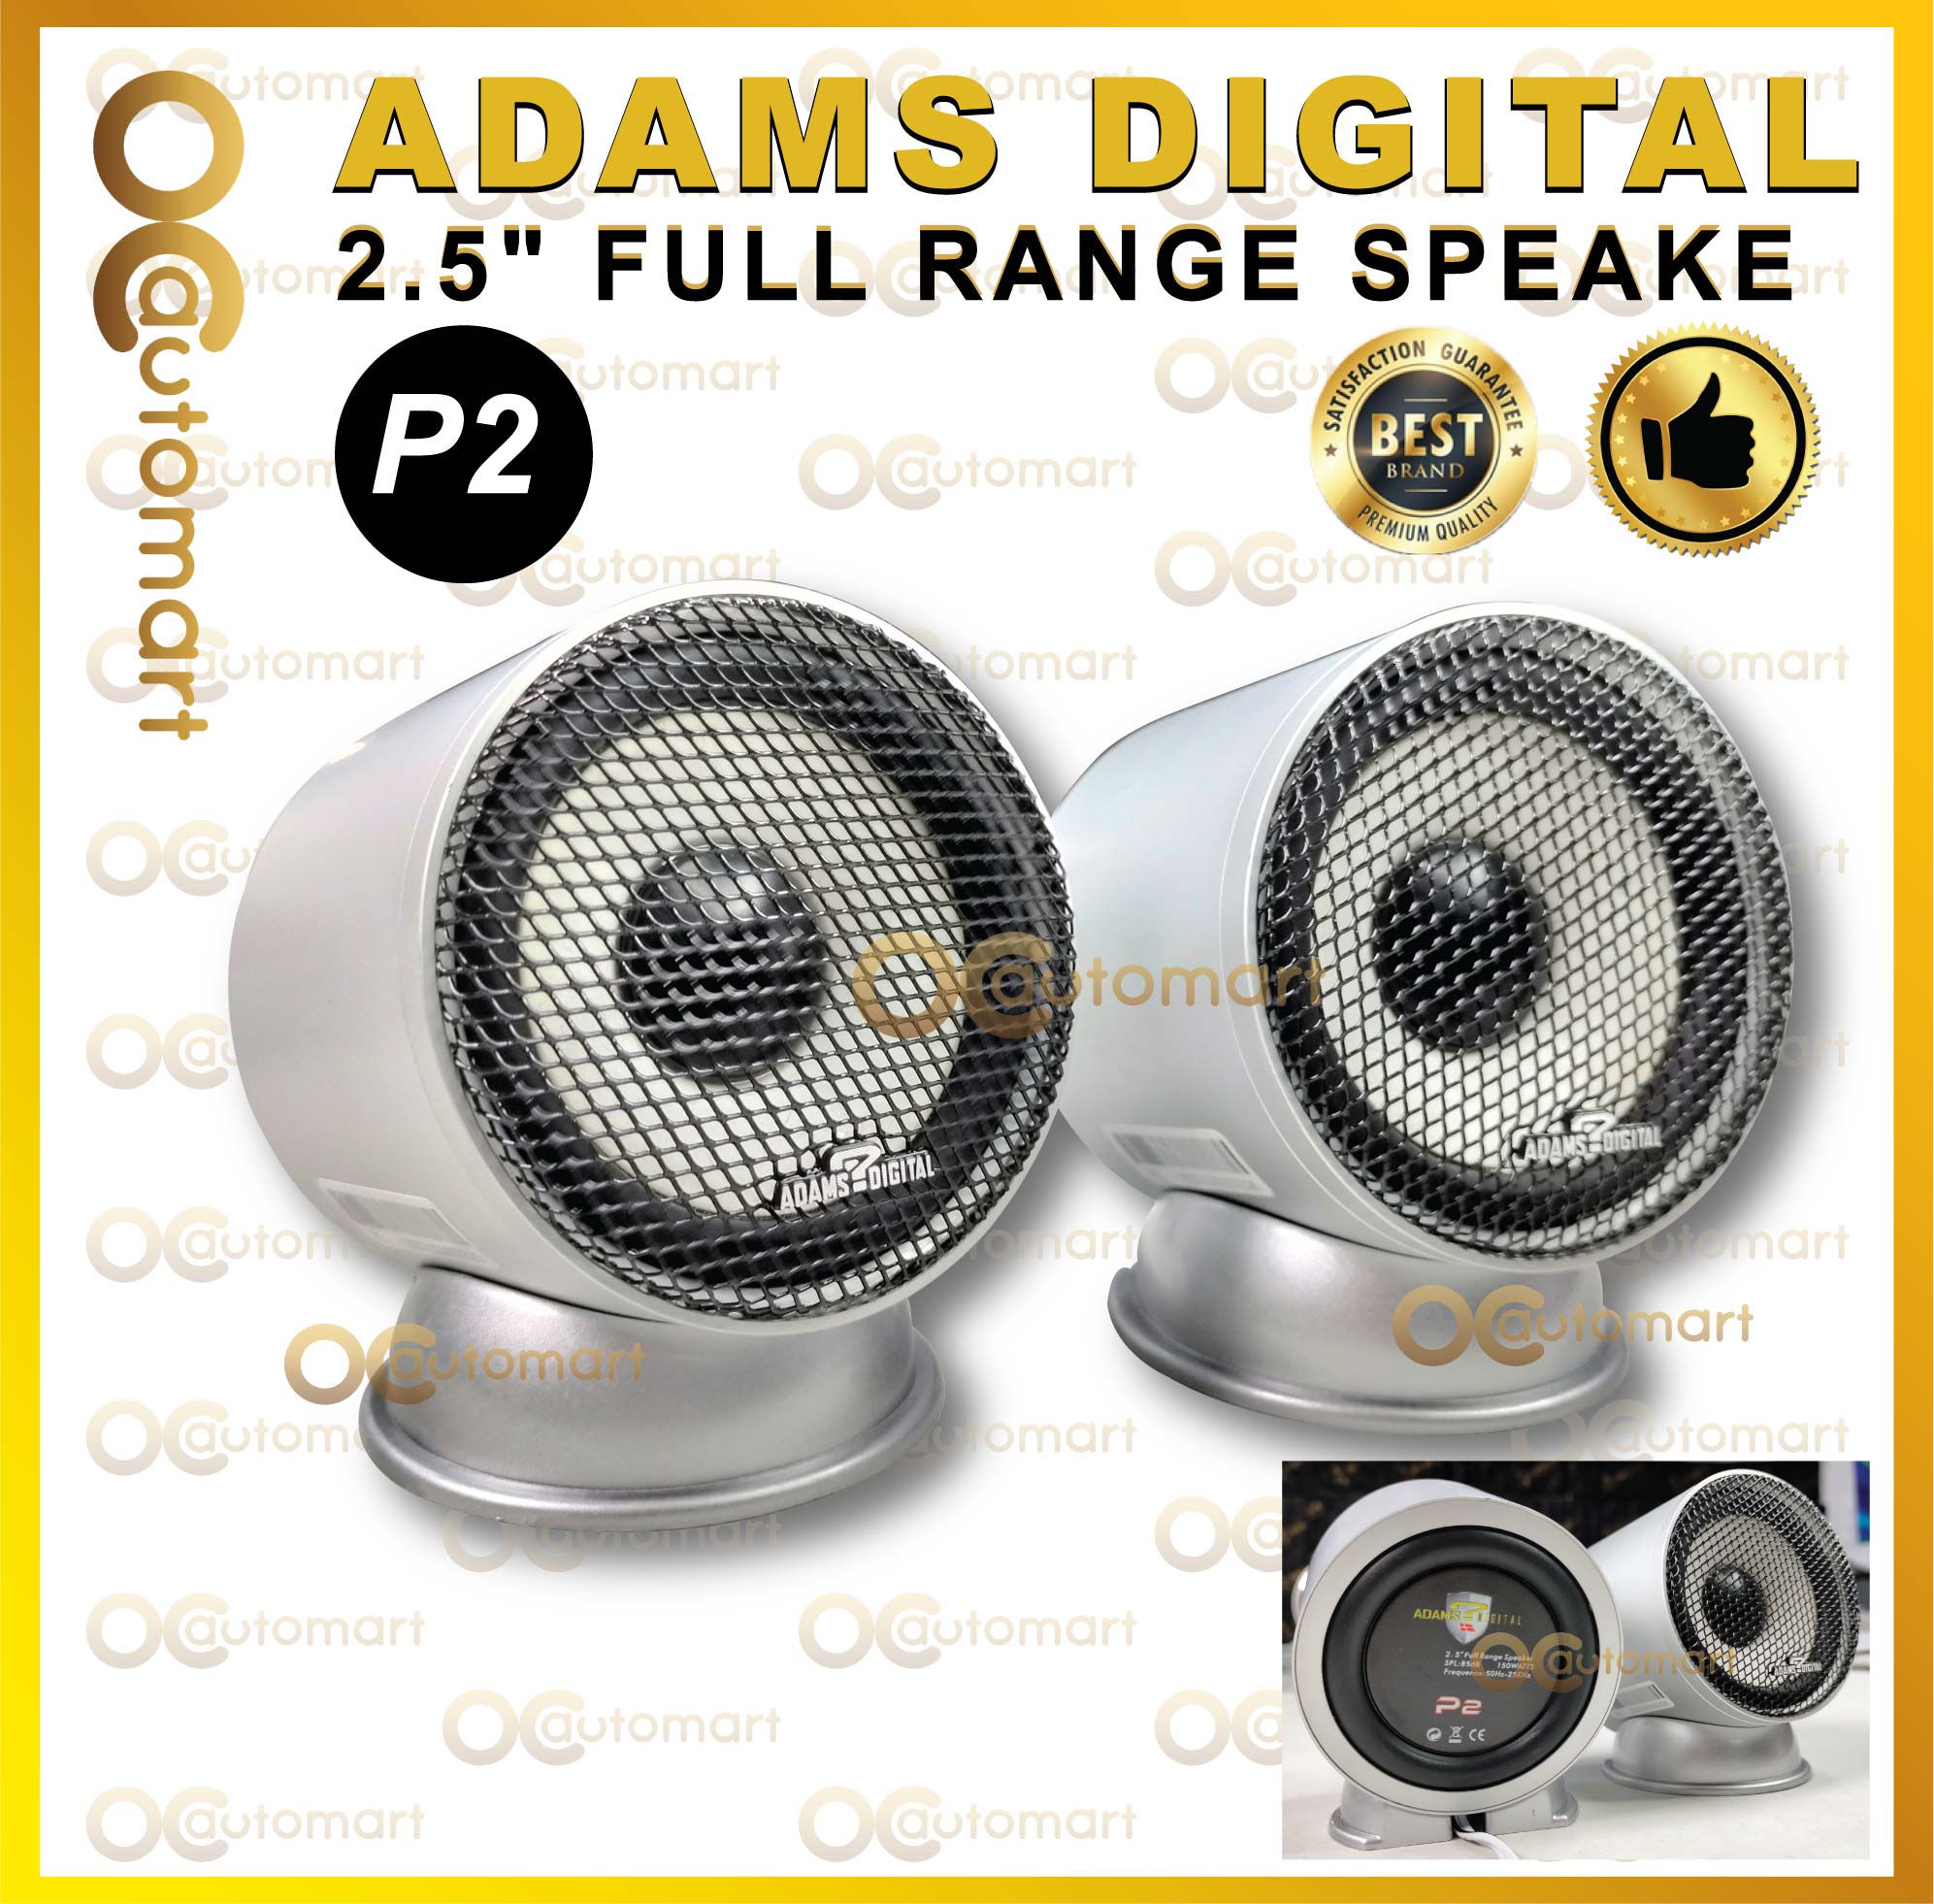 Adams Digital P2 2.5" Full Range Speaker (RMS 60watts/150watts)